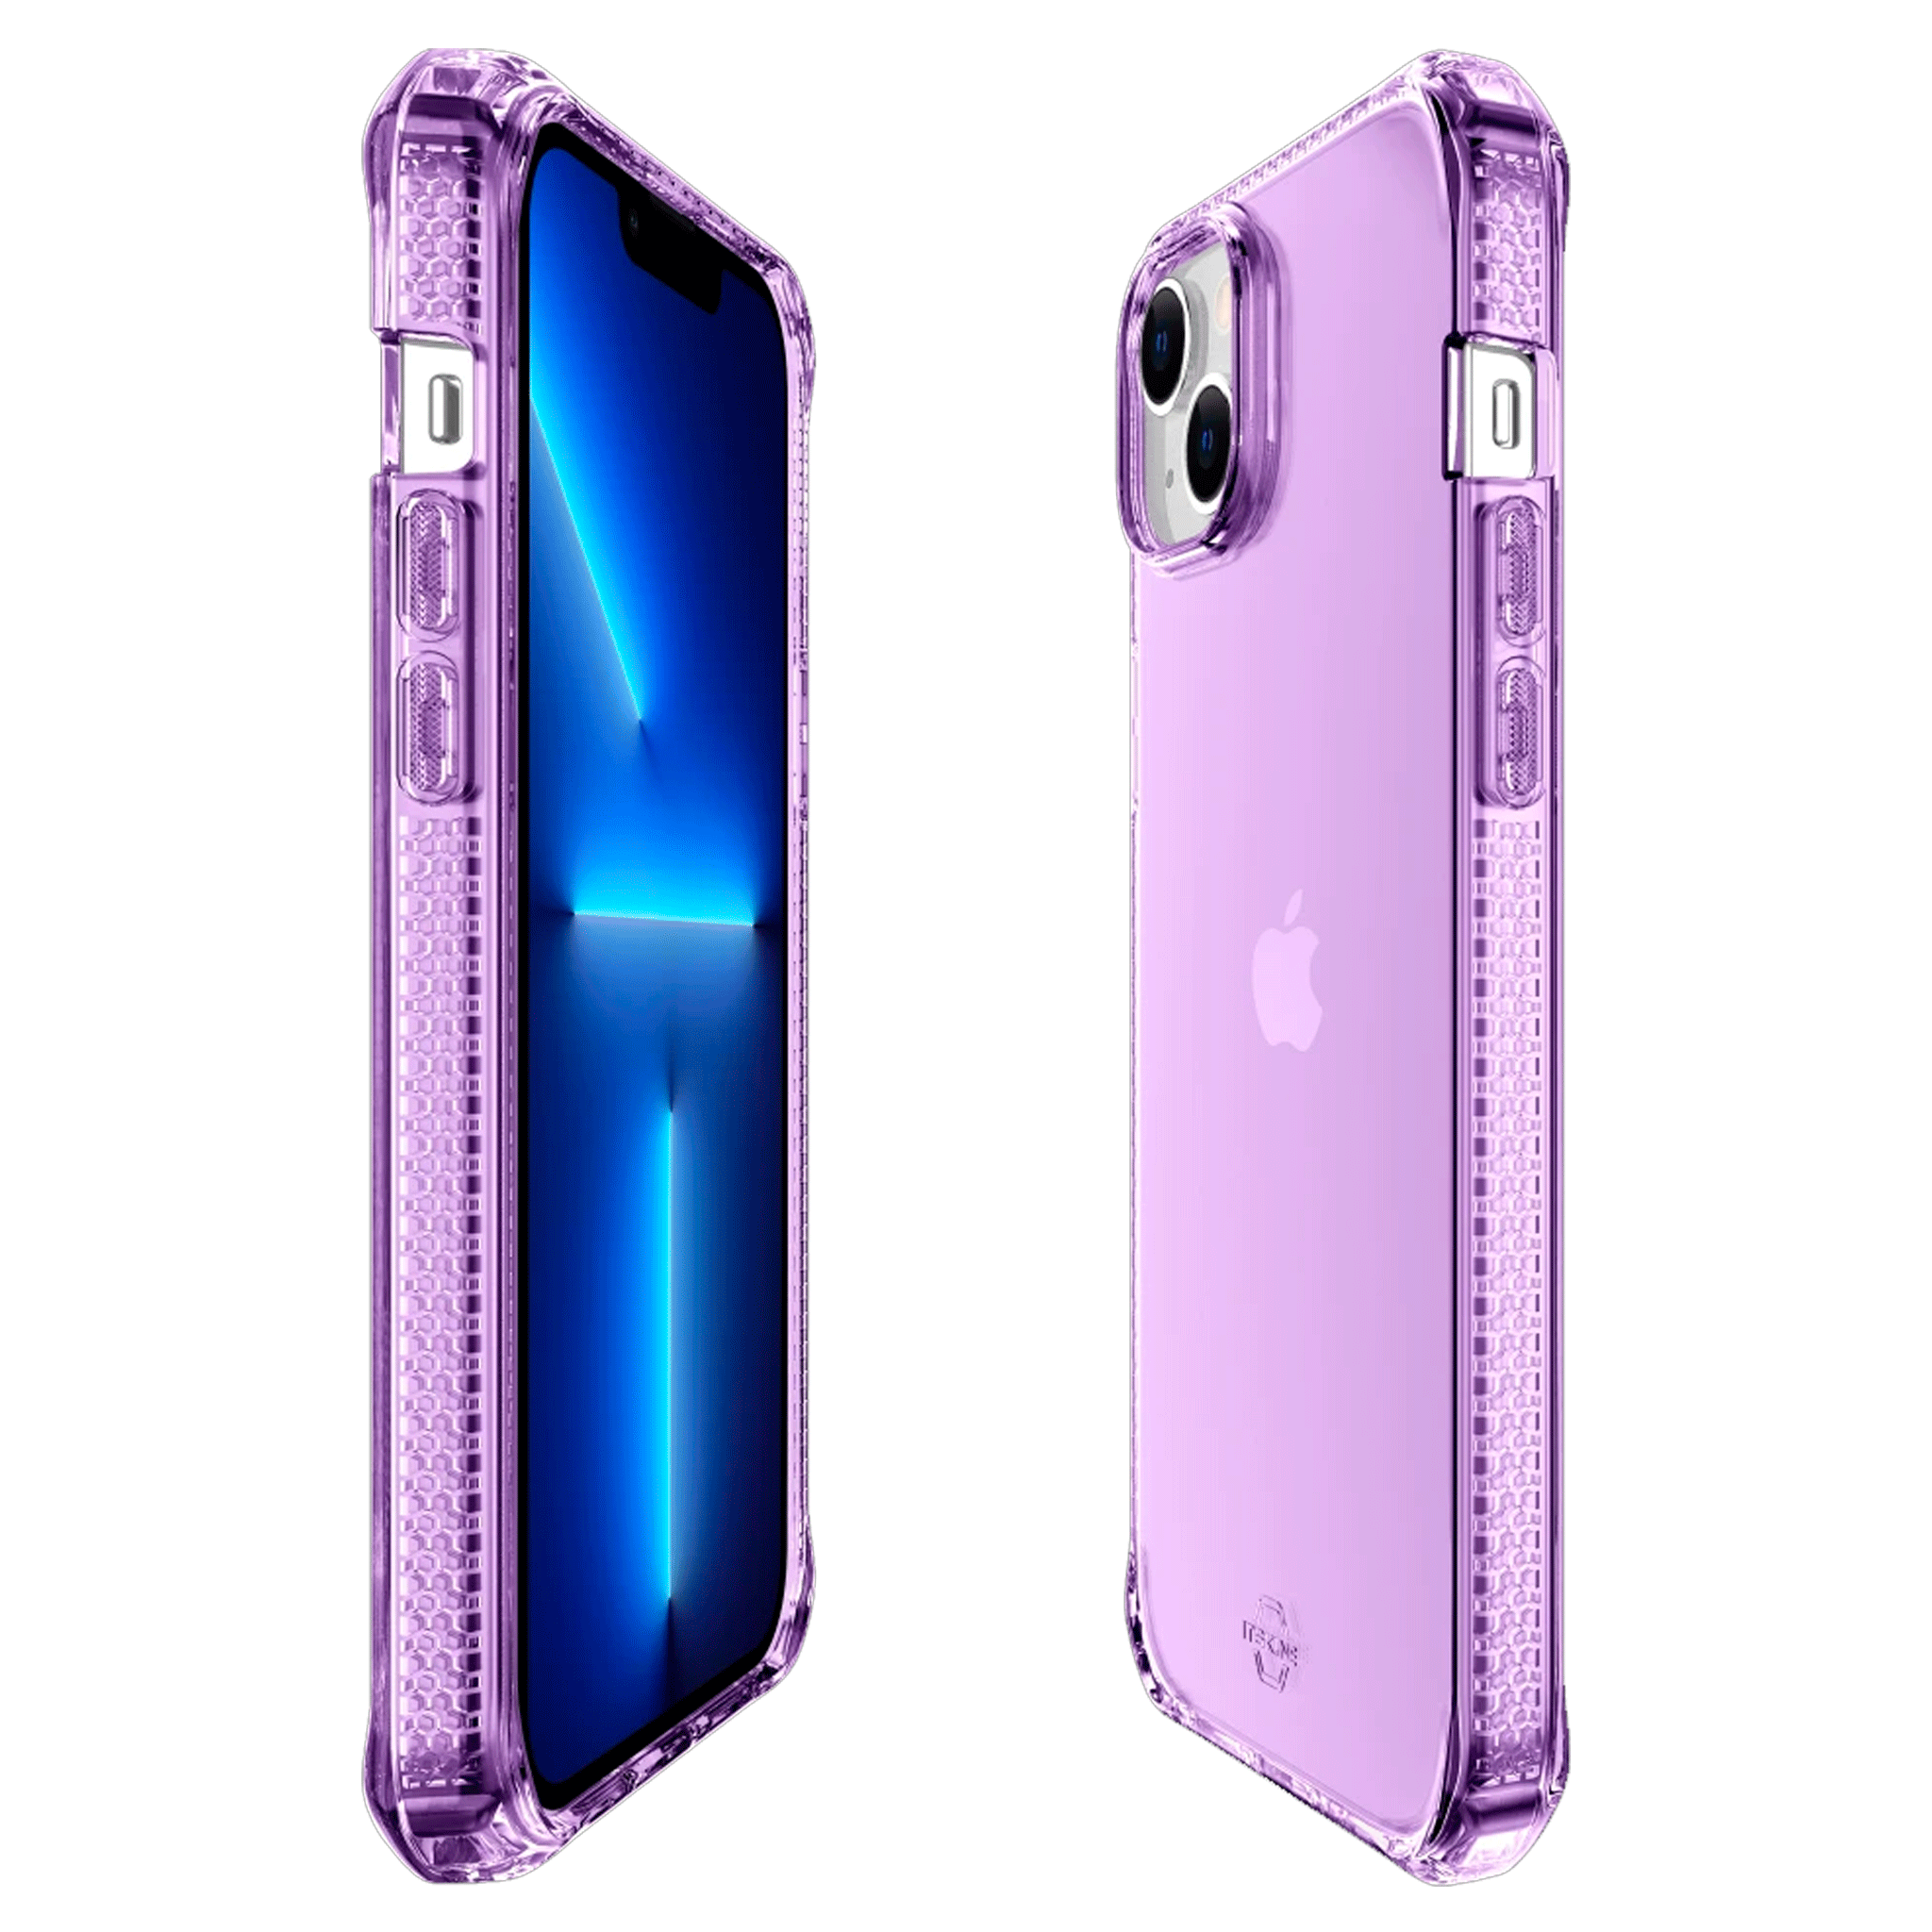 Itskins - Spectrum_r Clear Case For Apple Iphone 14 Plus - Light Purple